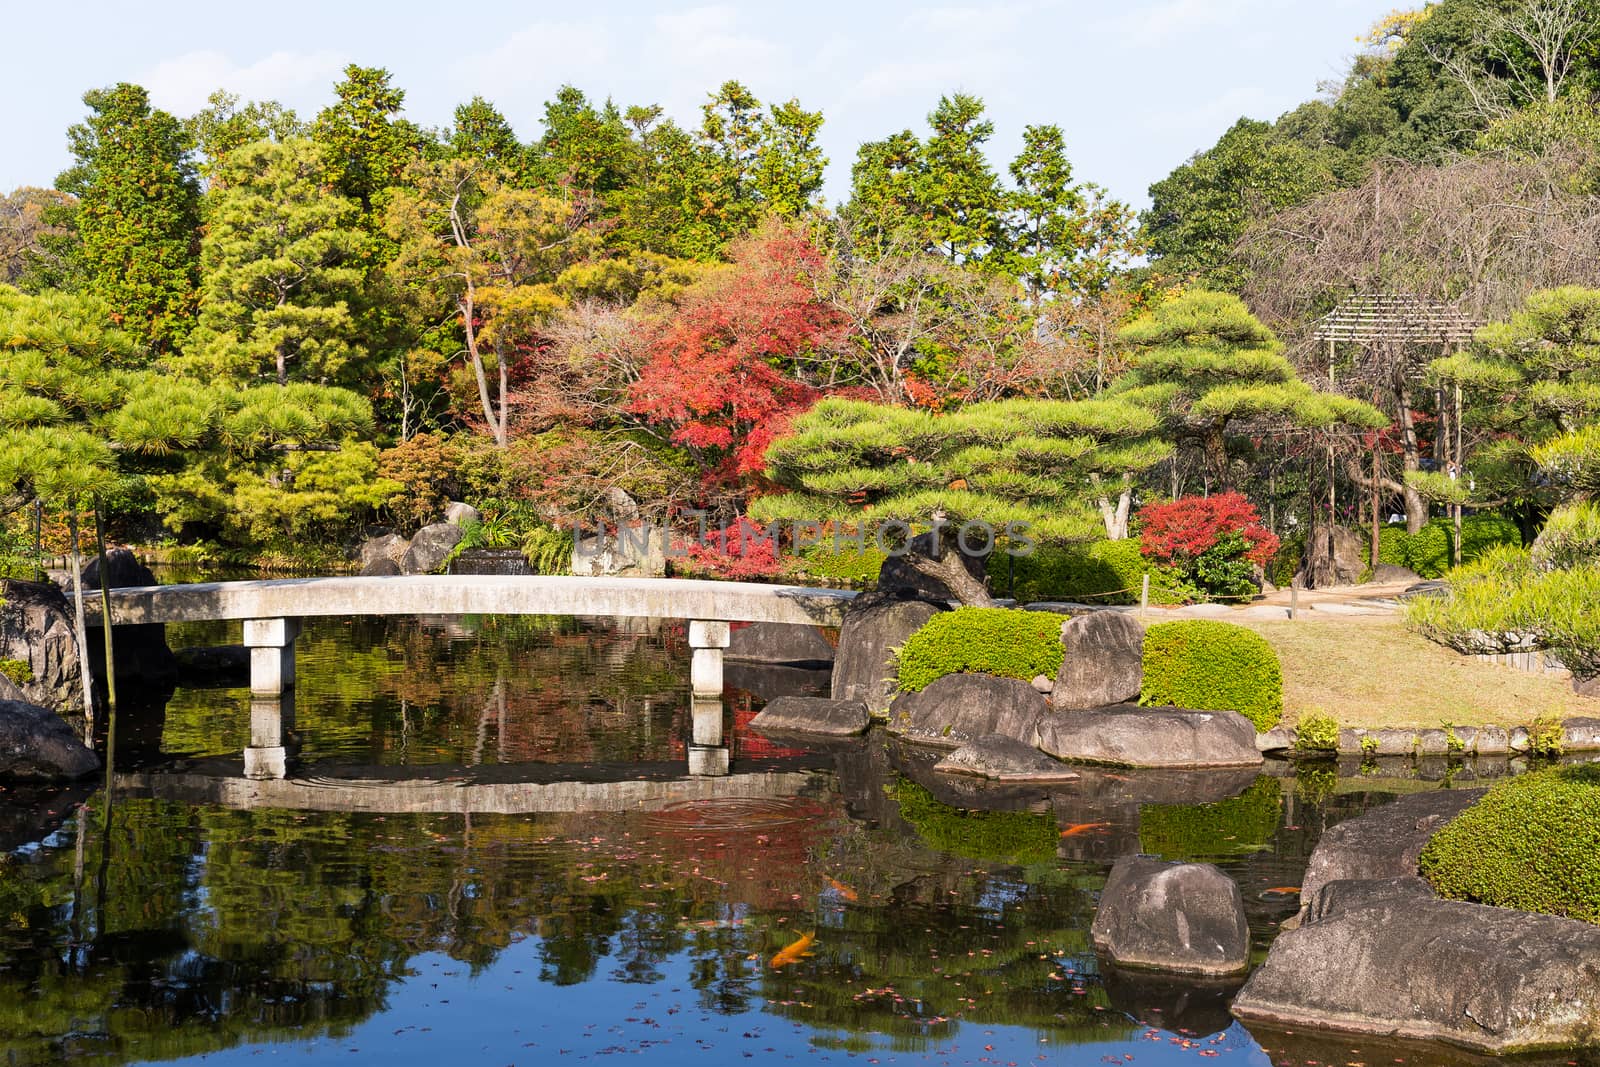 Japanese garden in autumn by leungchopan